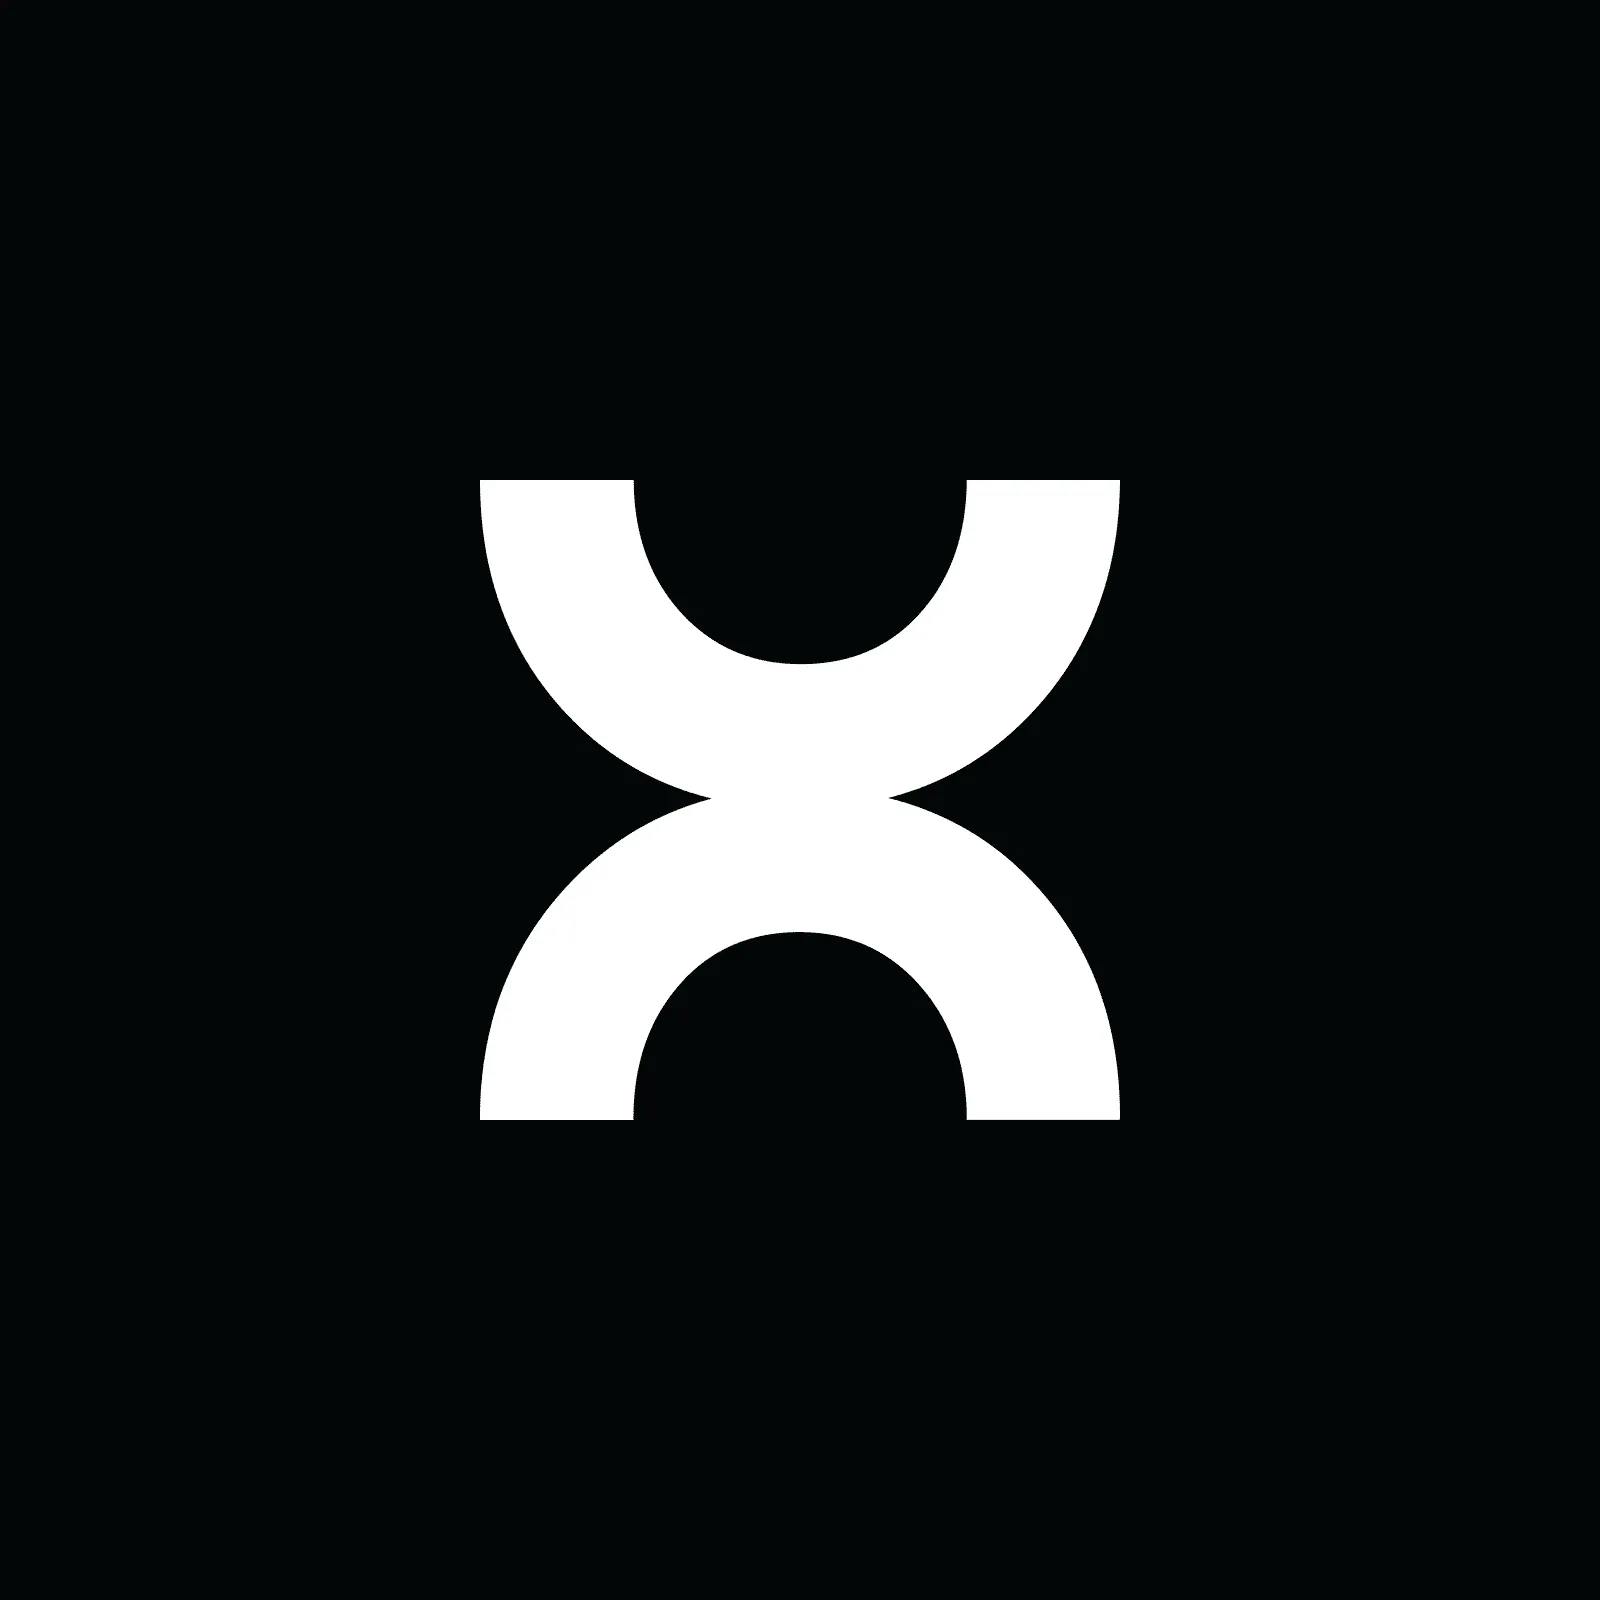 Pixelmatters Logo